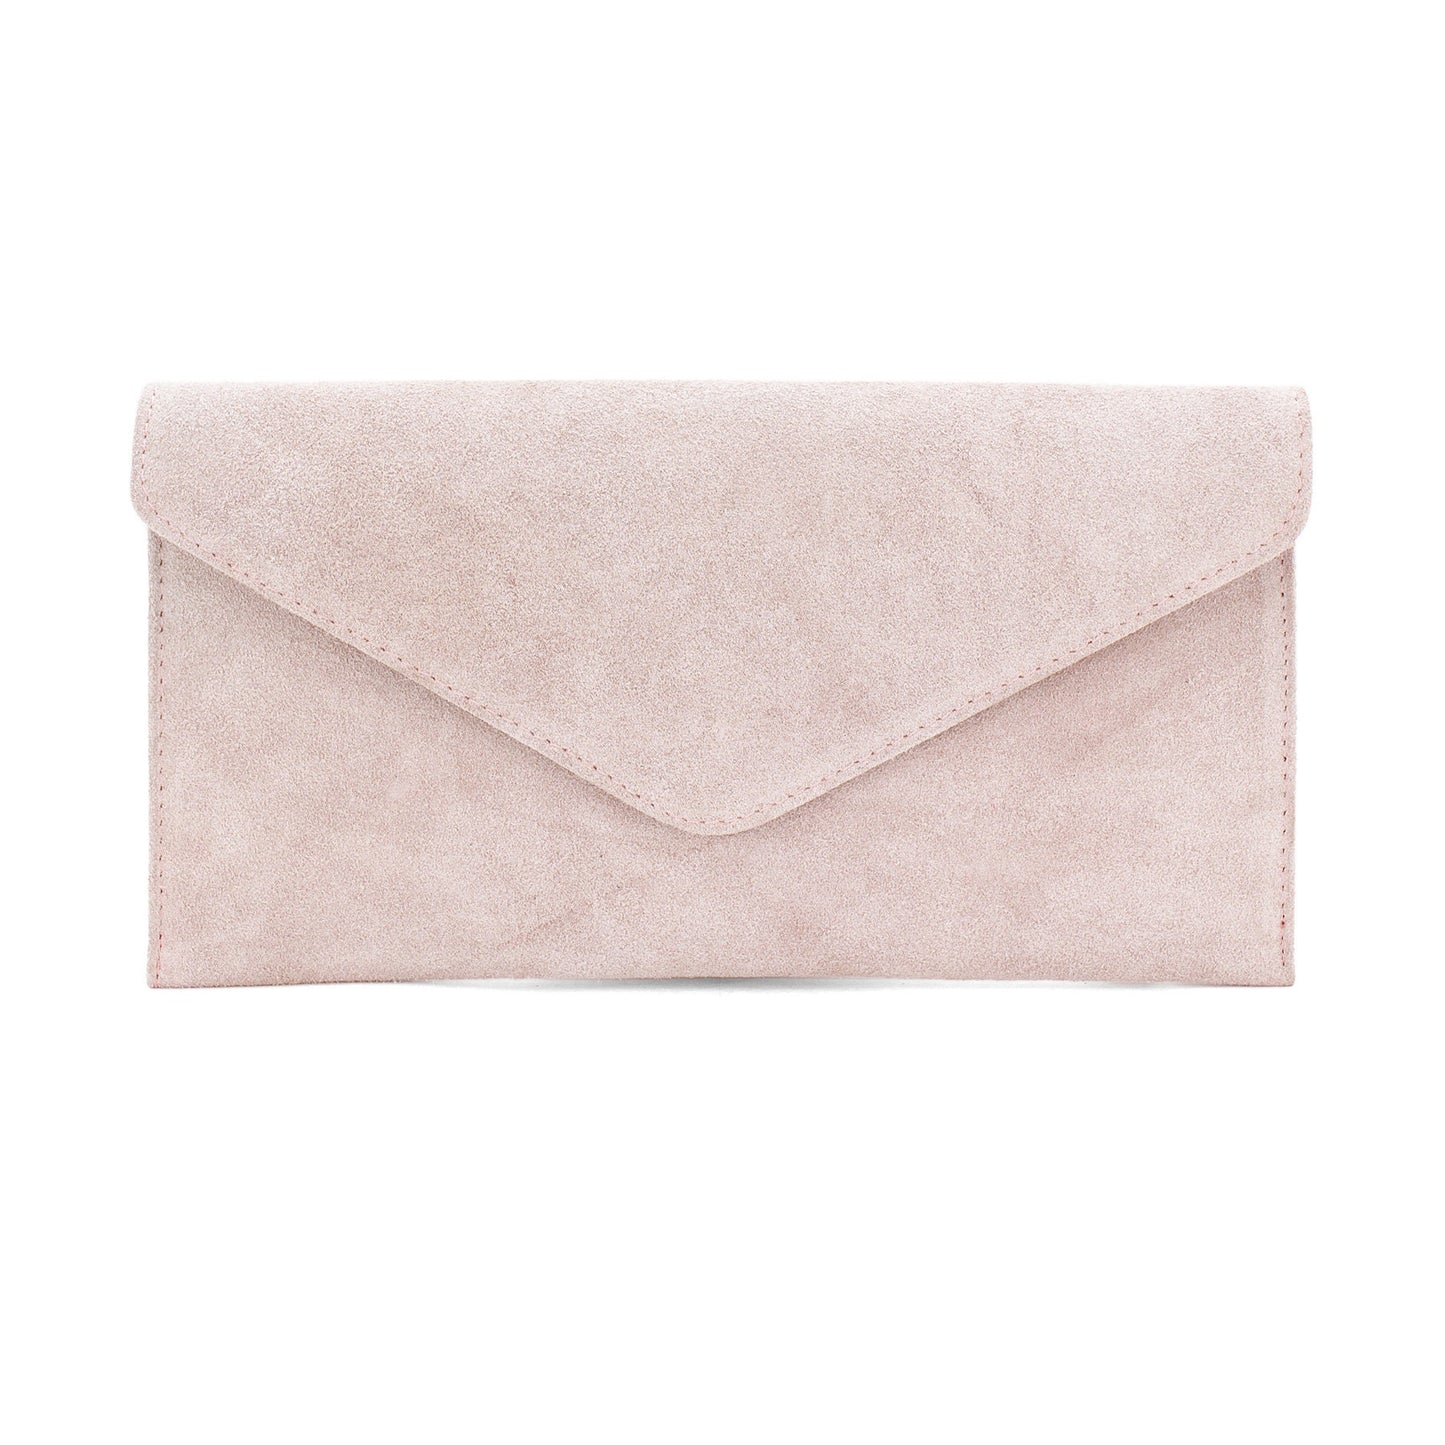 White Envelope Clutch Bag